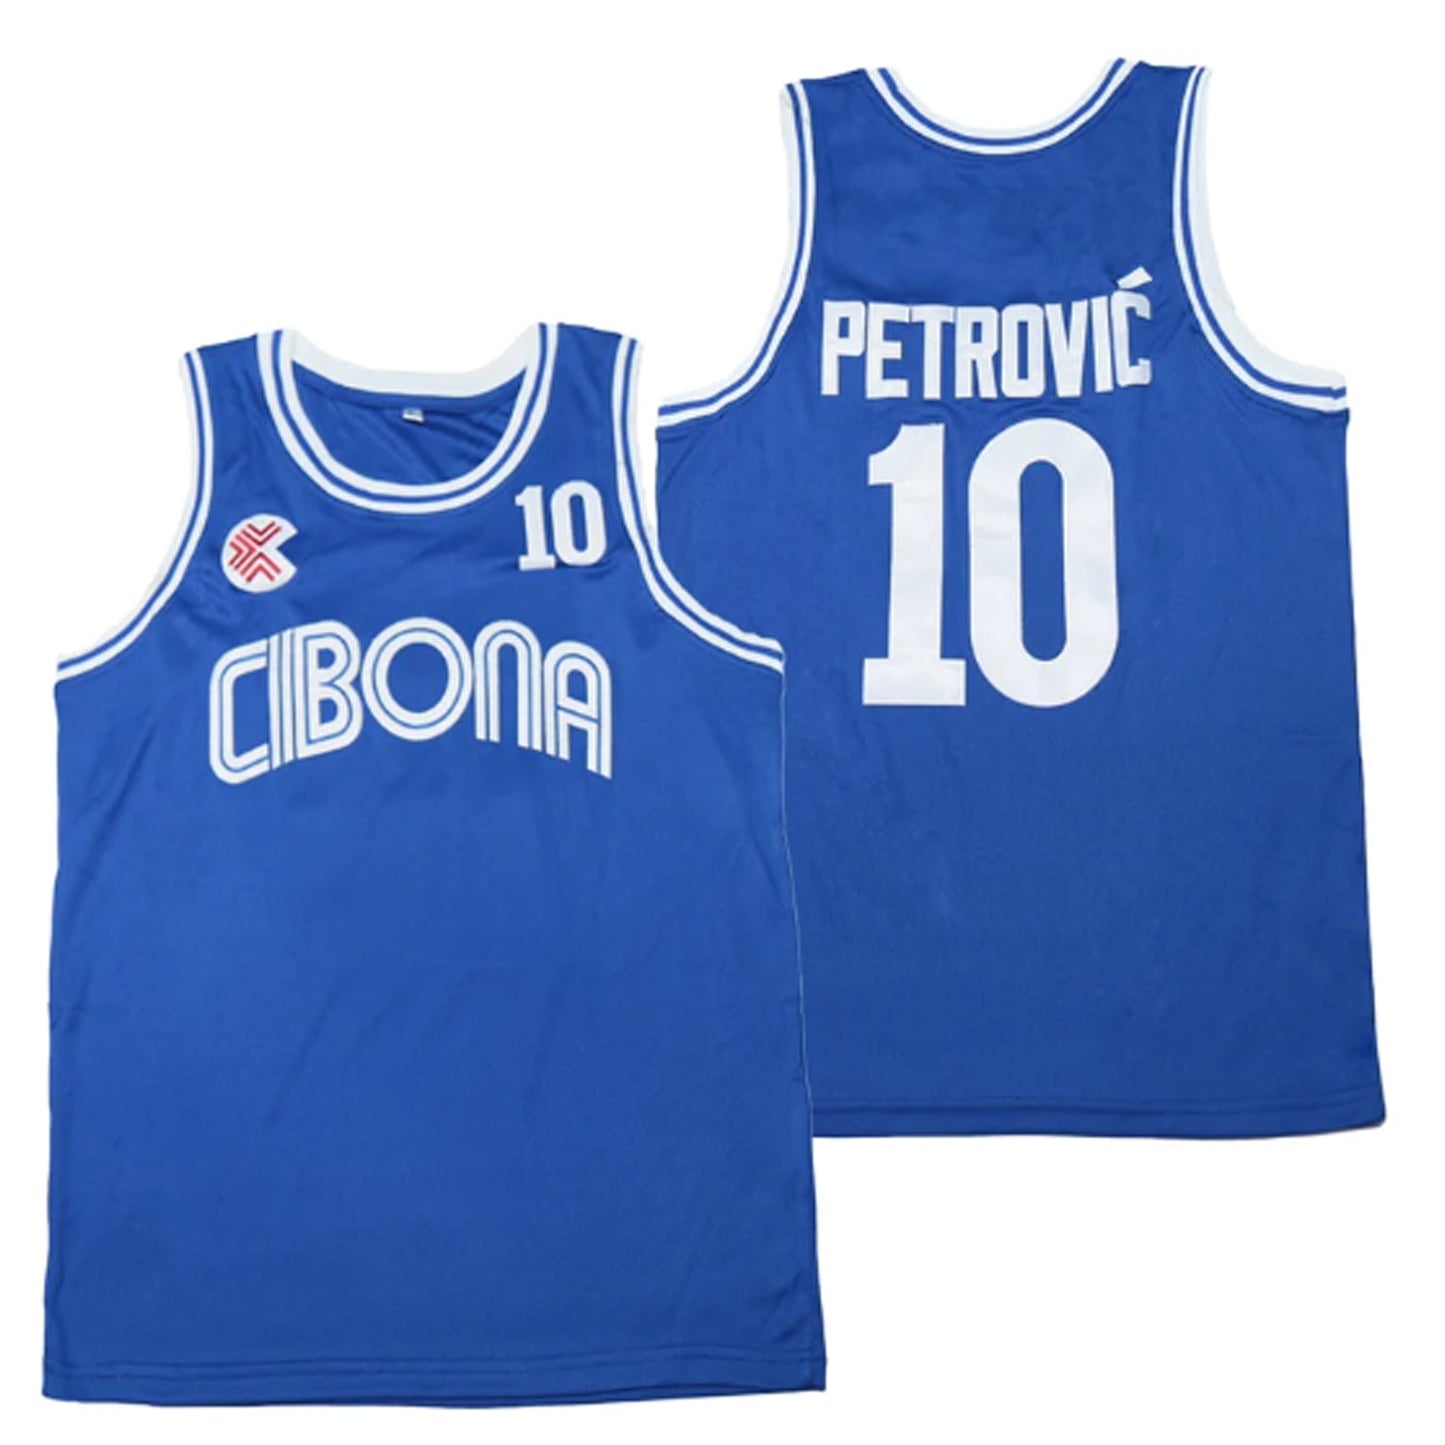 Drazen Petrovic Croatia Cibona 10 Jersey